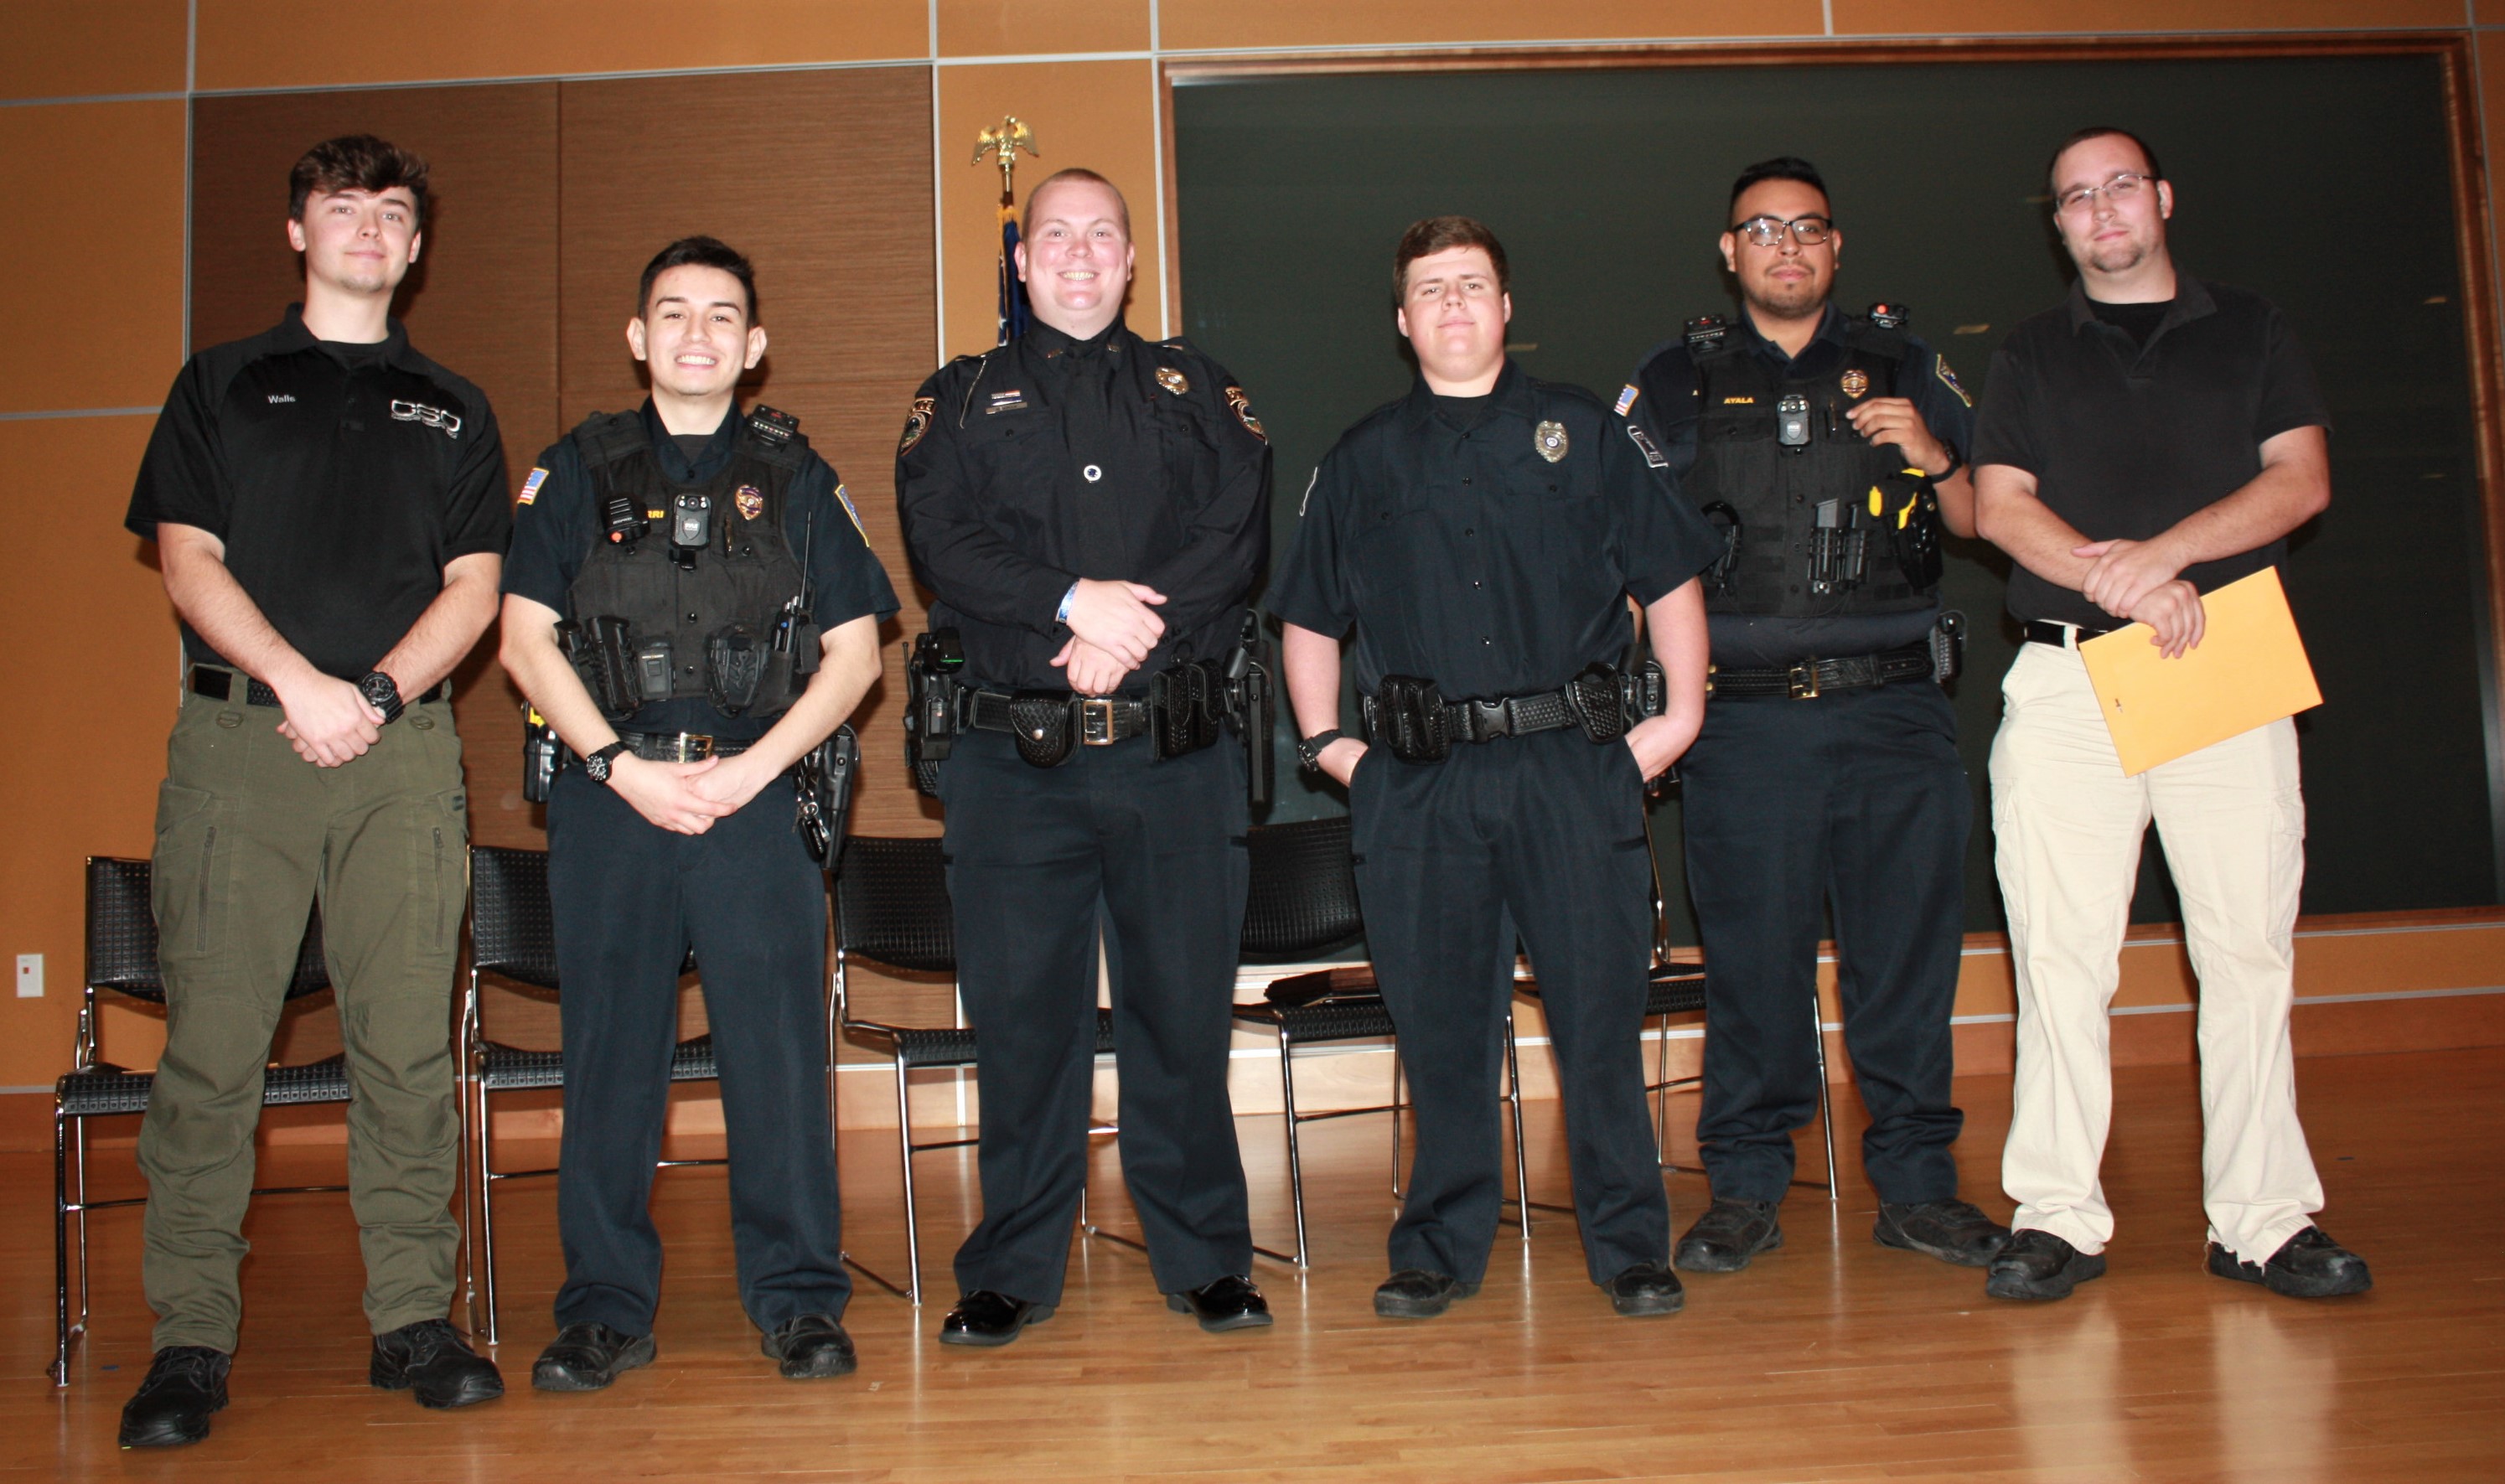 GNTC Basic Law Enforcement graduates (left to right) Joshua Walls, Jose Ulibarri, Zachary Newman, Chaz Shelton, Benjamin Ayala and Owen Towe (not pictured Emily L. Dillard).